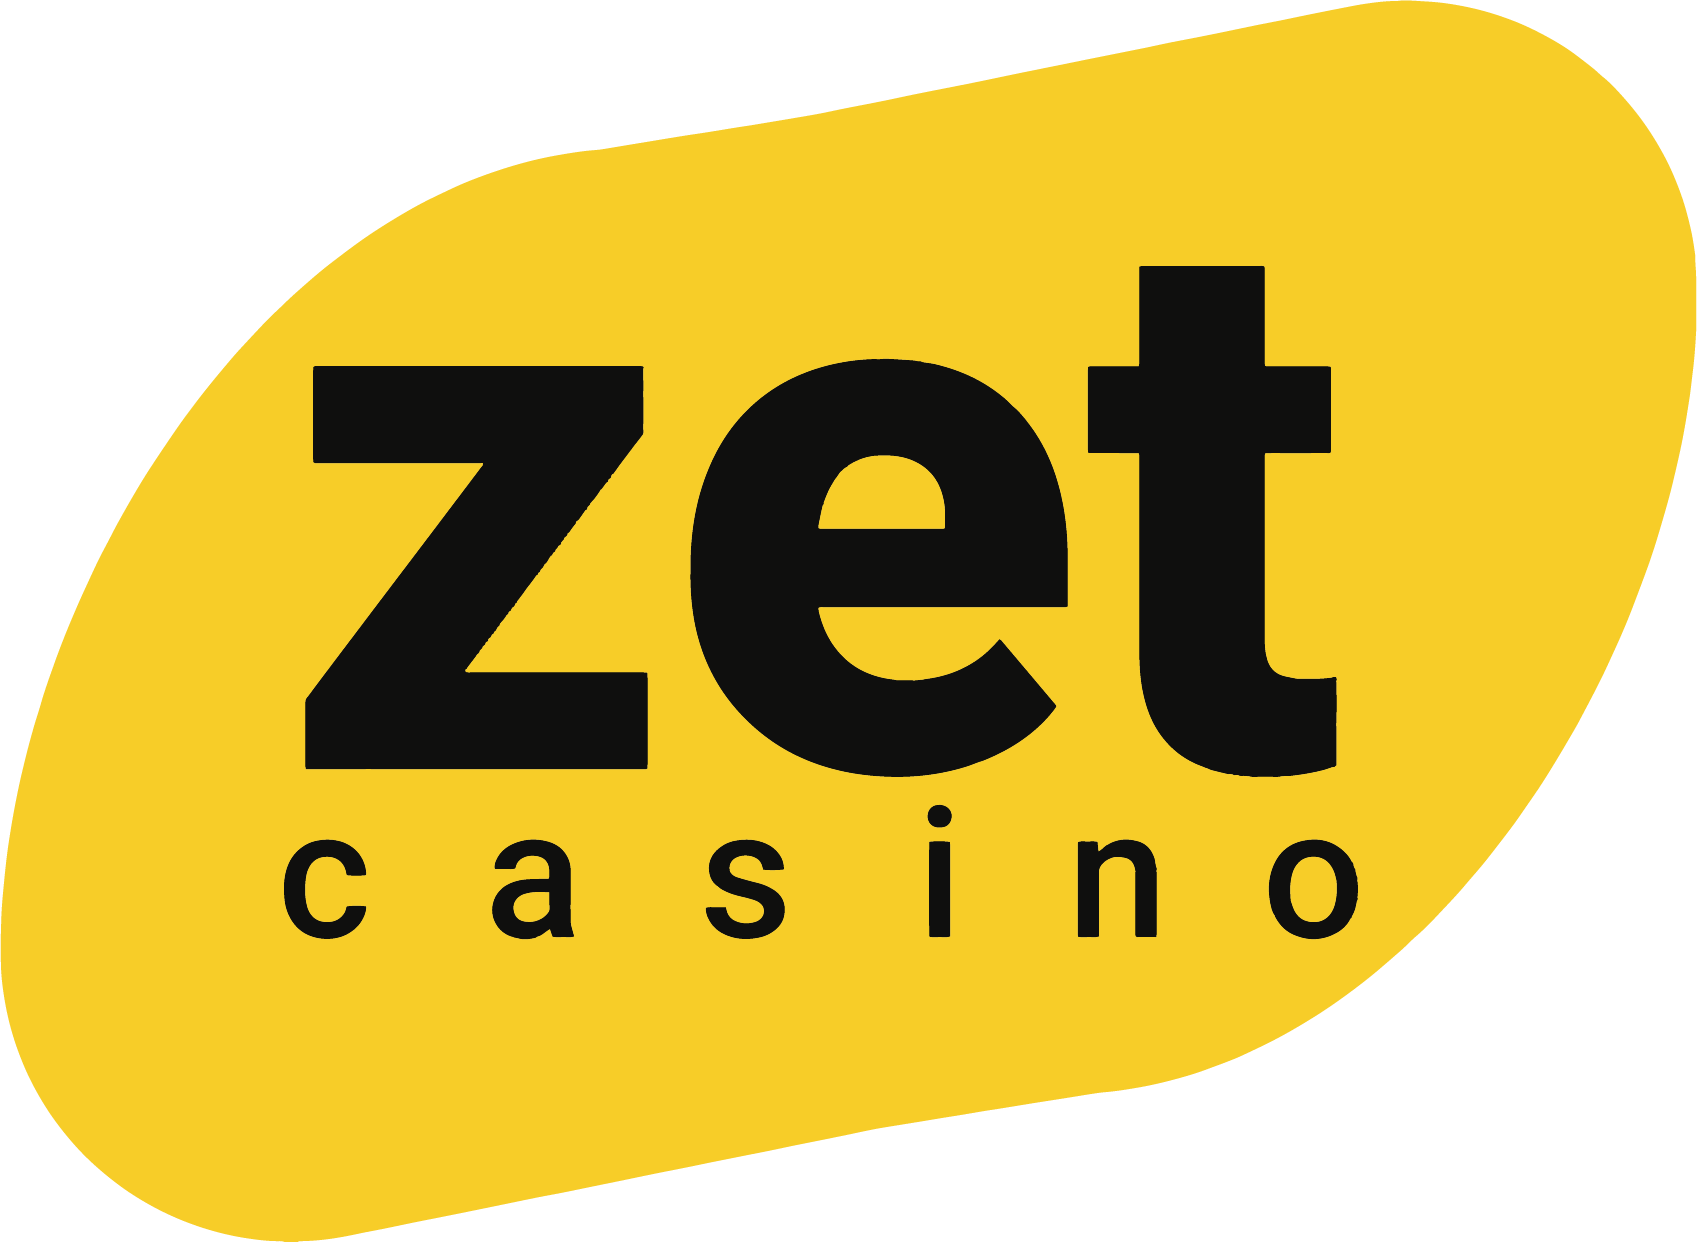 Zet Casino Bewertung